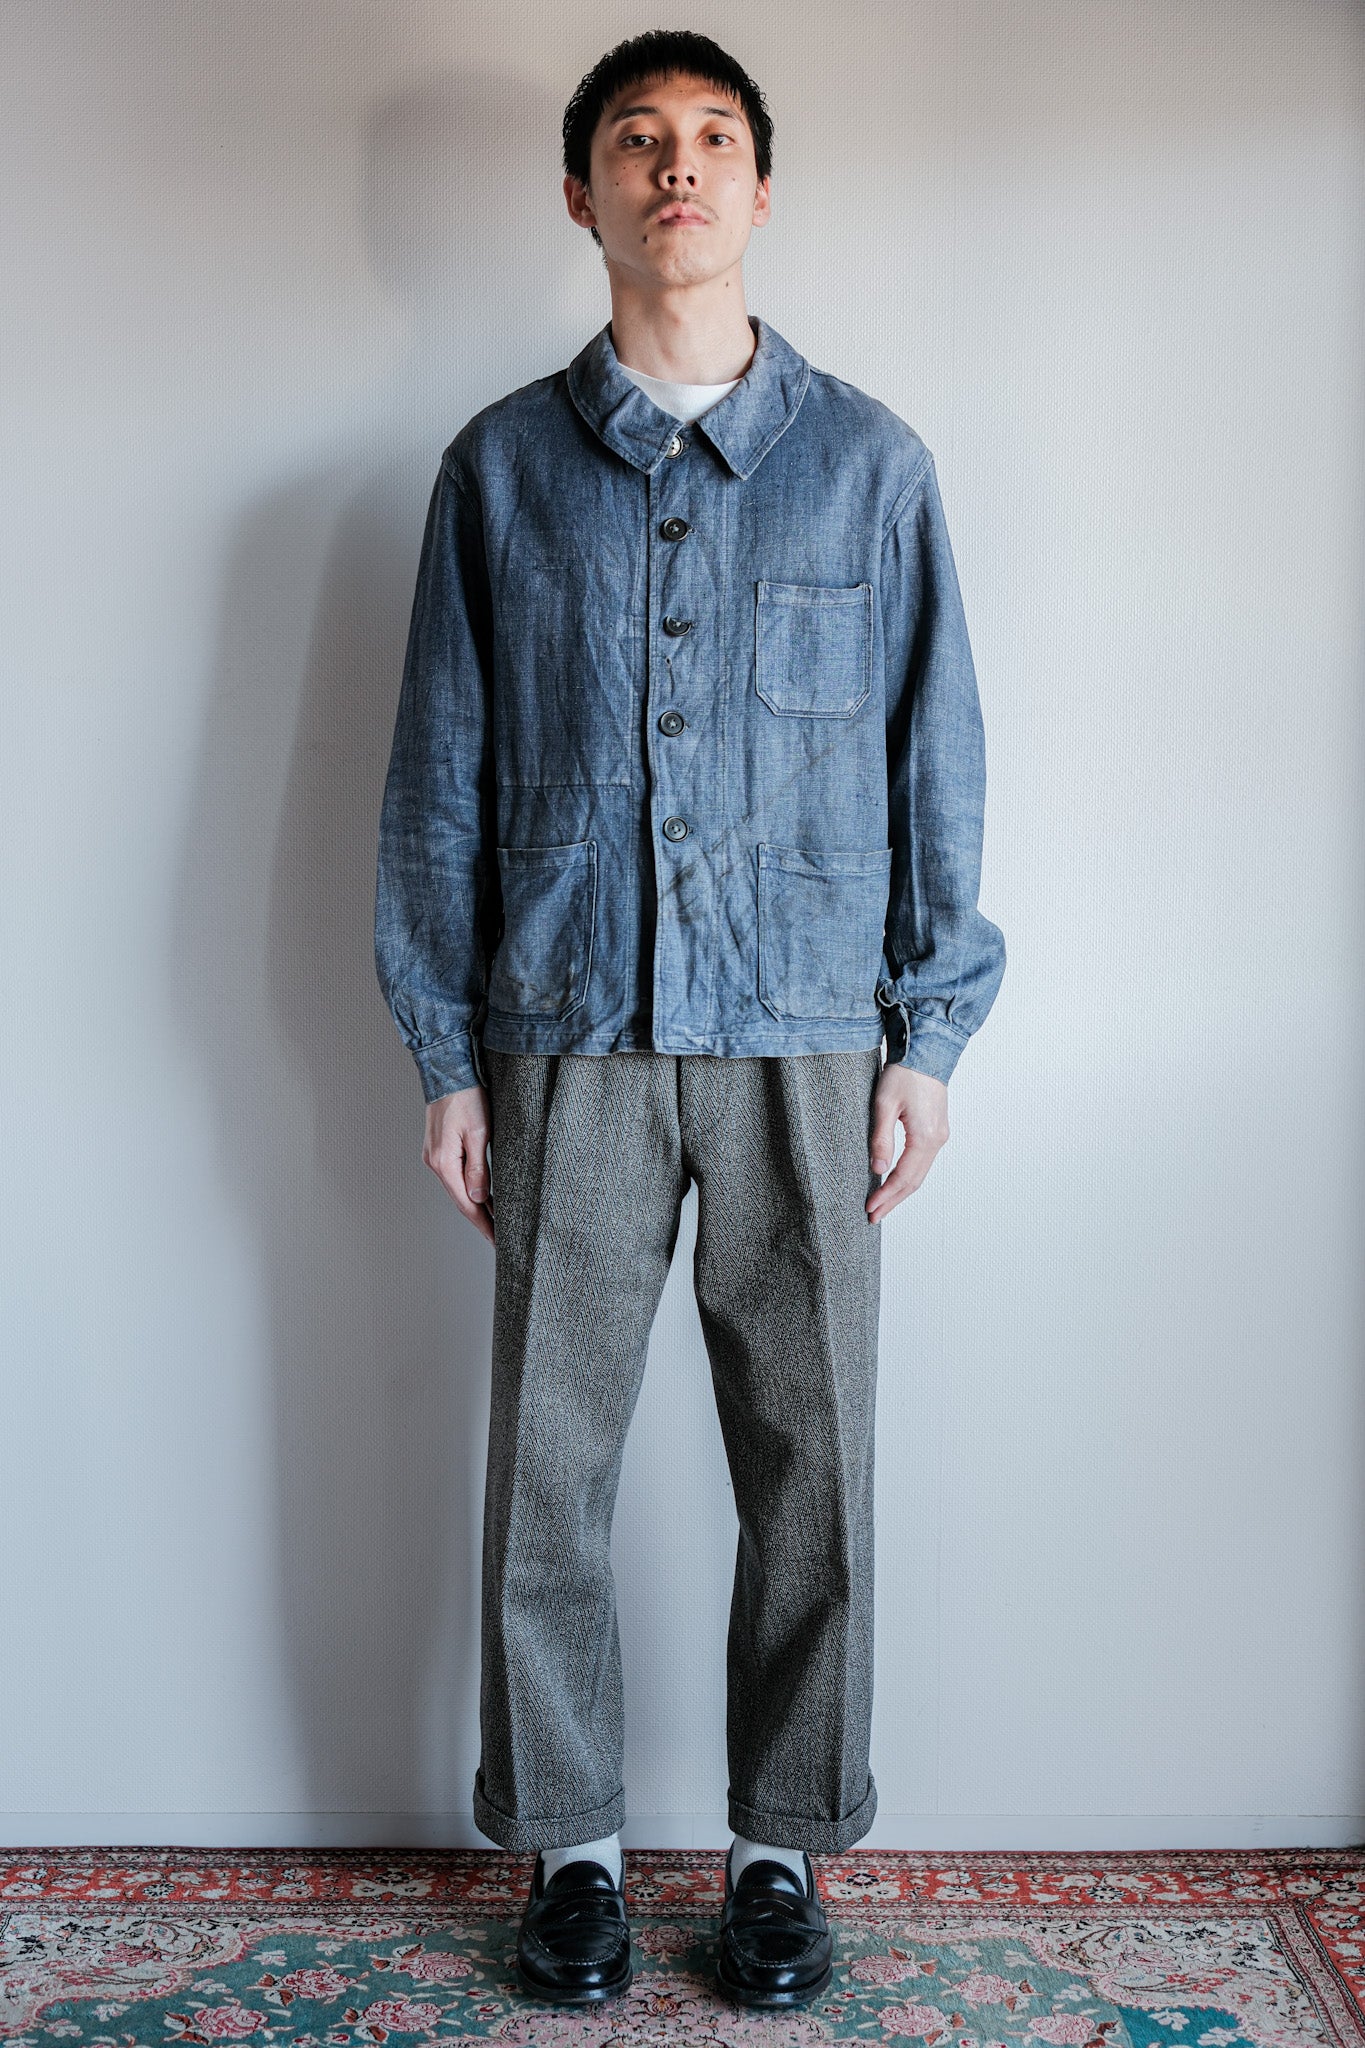 [~ 40's] French Vintage Indigo Linen Work Jacket Size.44